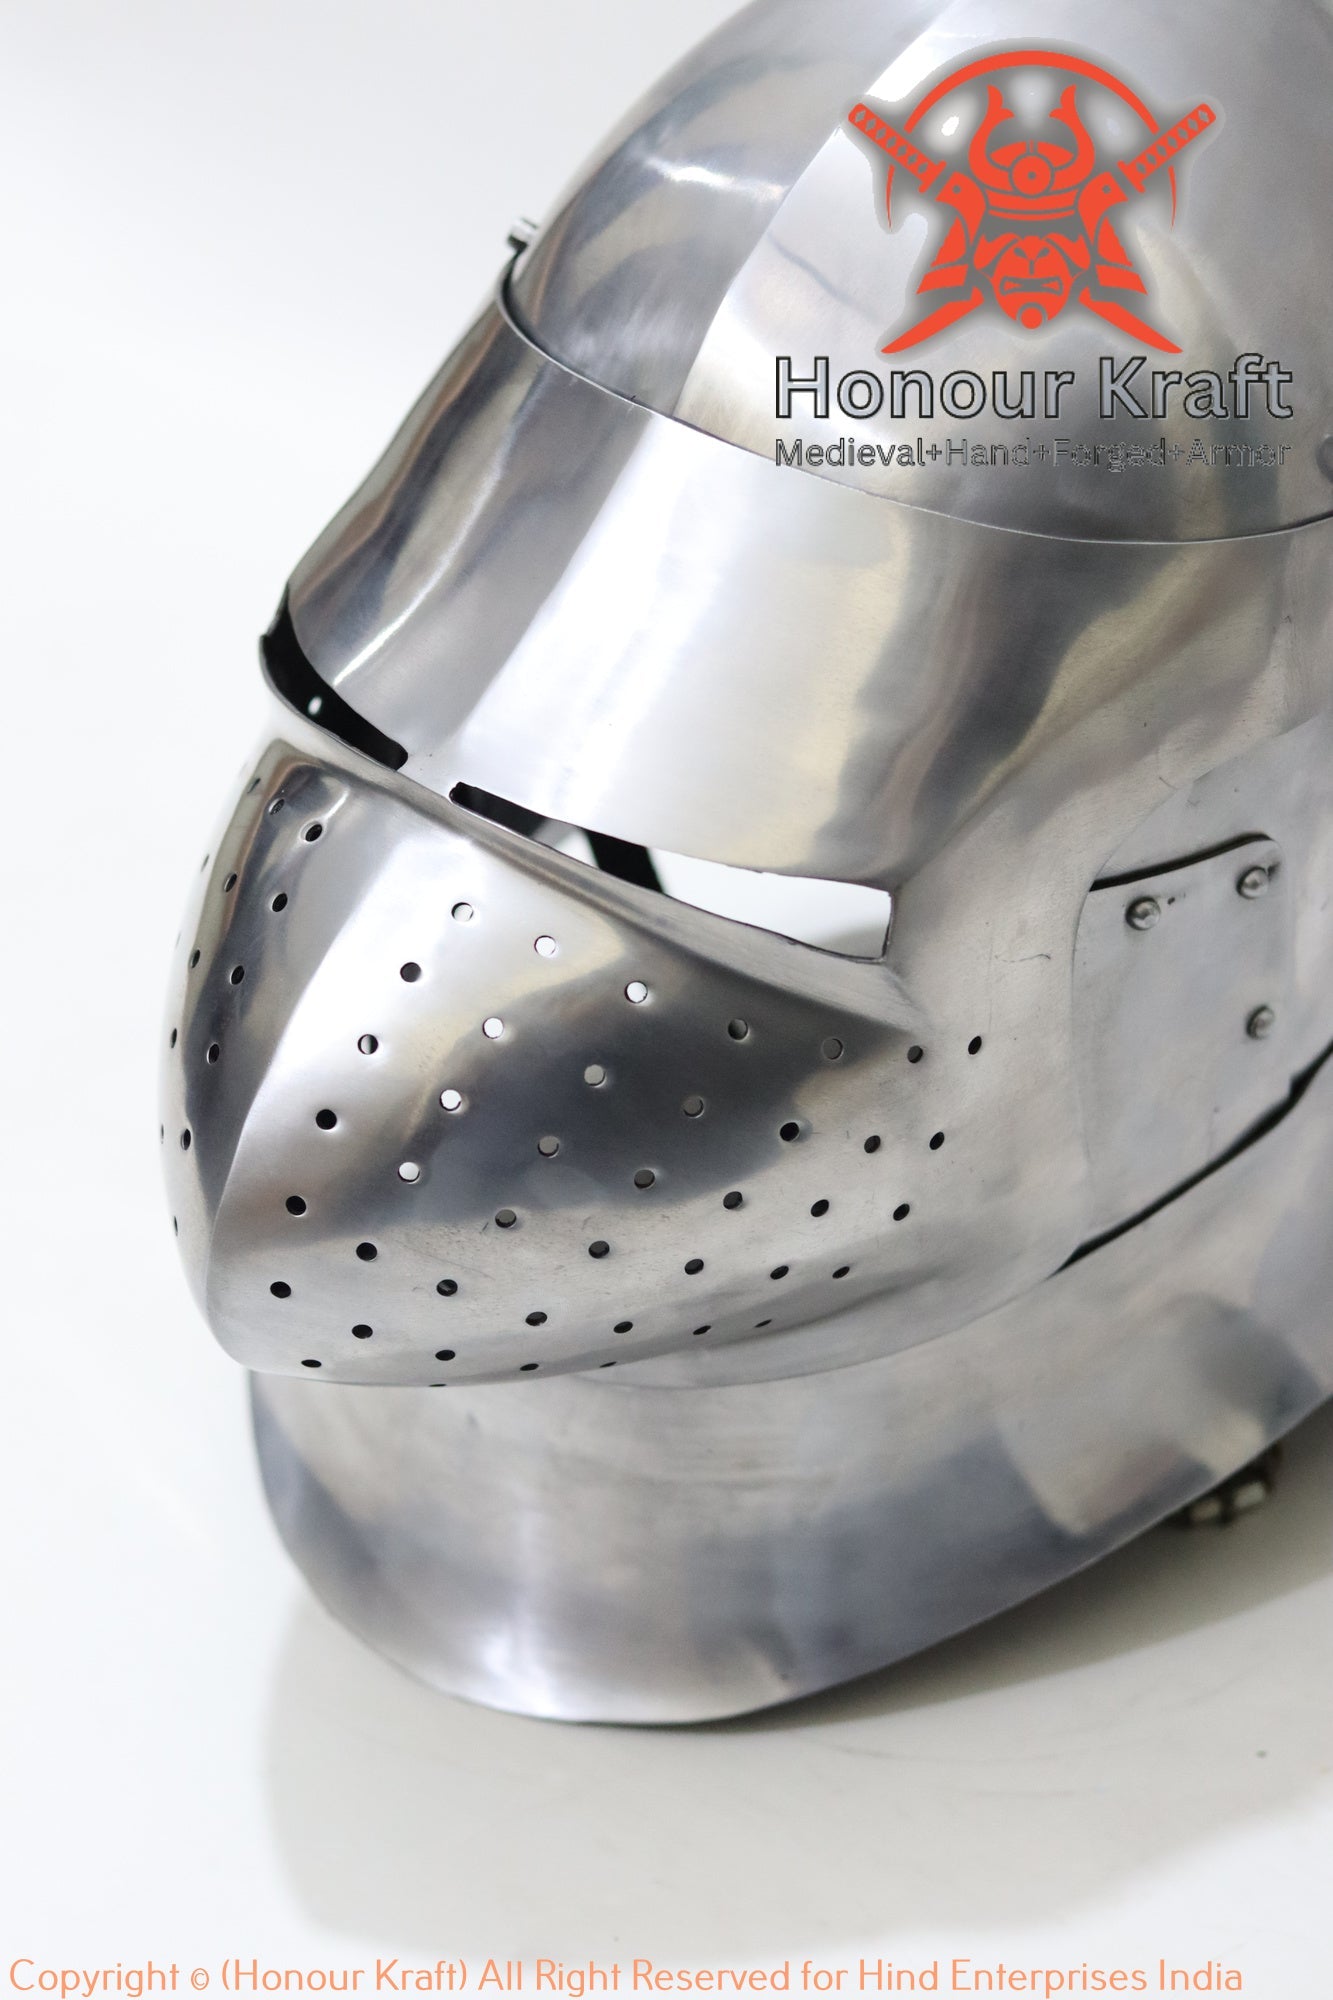 Great Bascinet Helmet Armor for SCA  buhurt